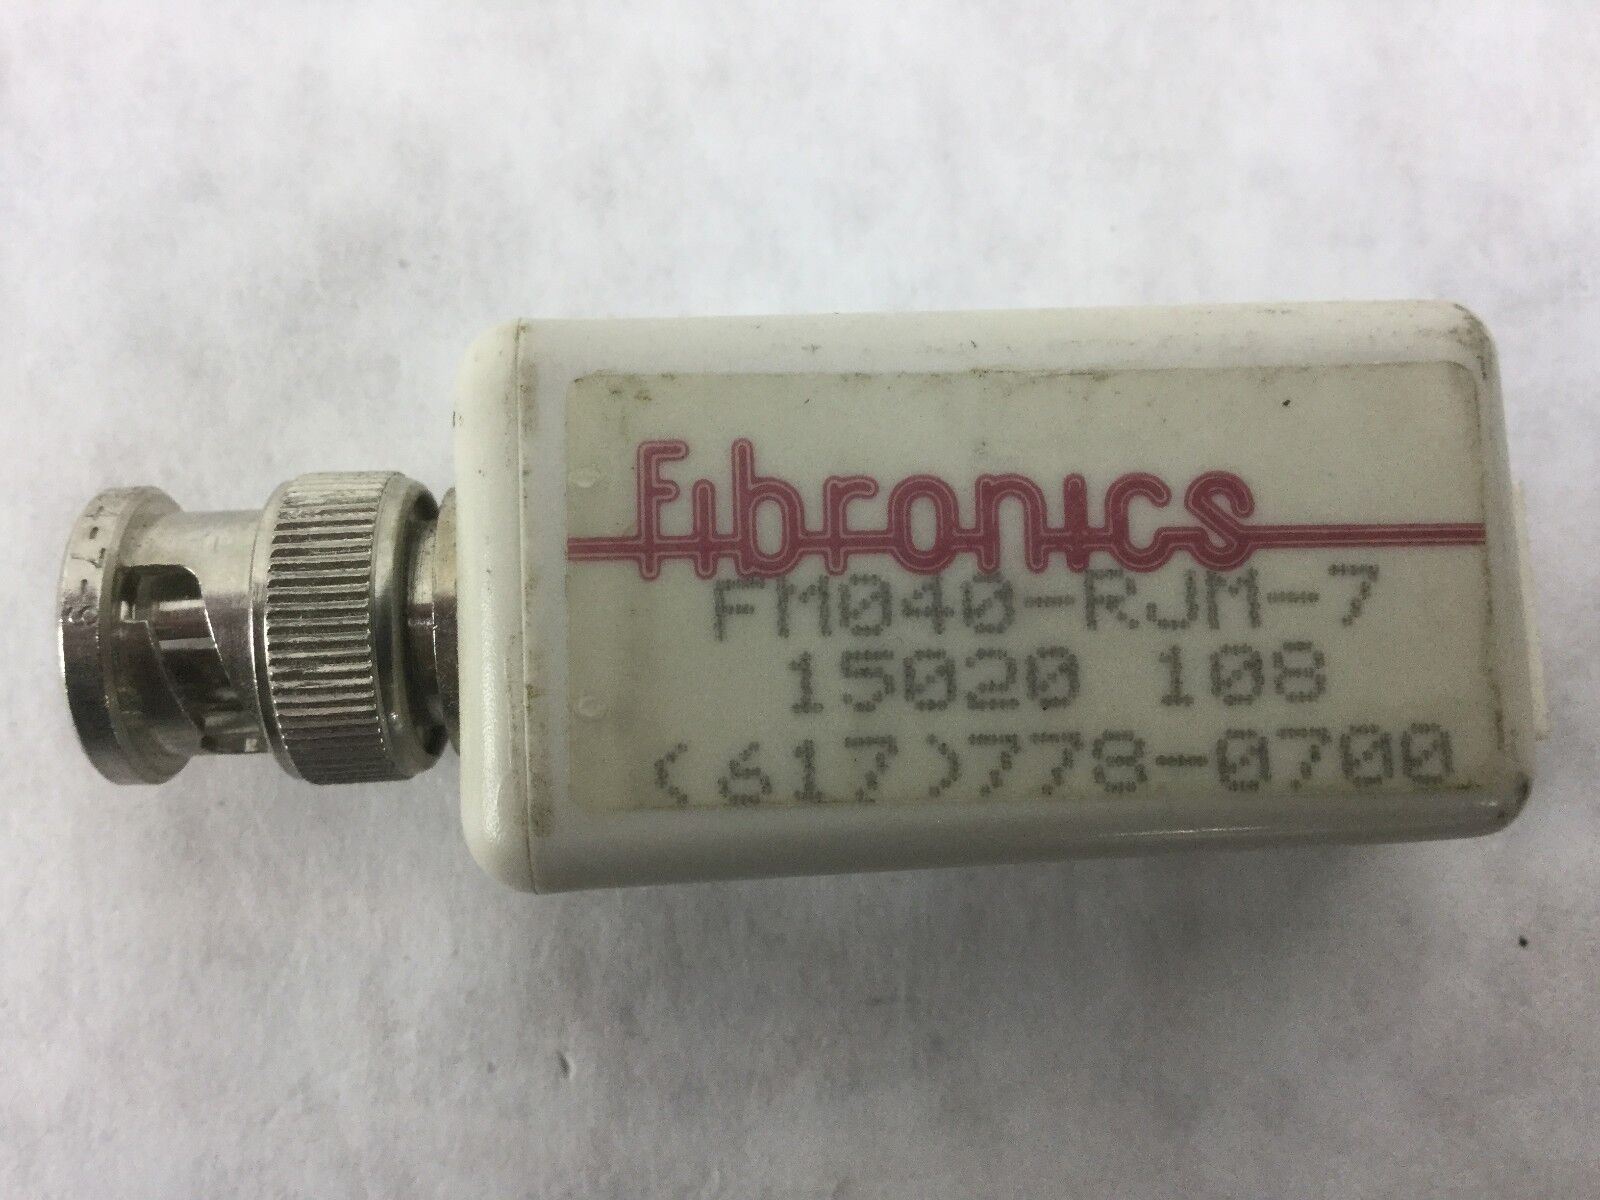 Fibronics Network Adapter FM040-RJM-7 15020 108